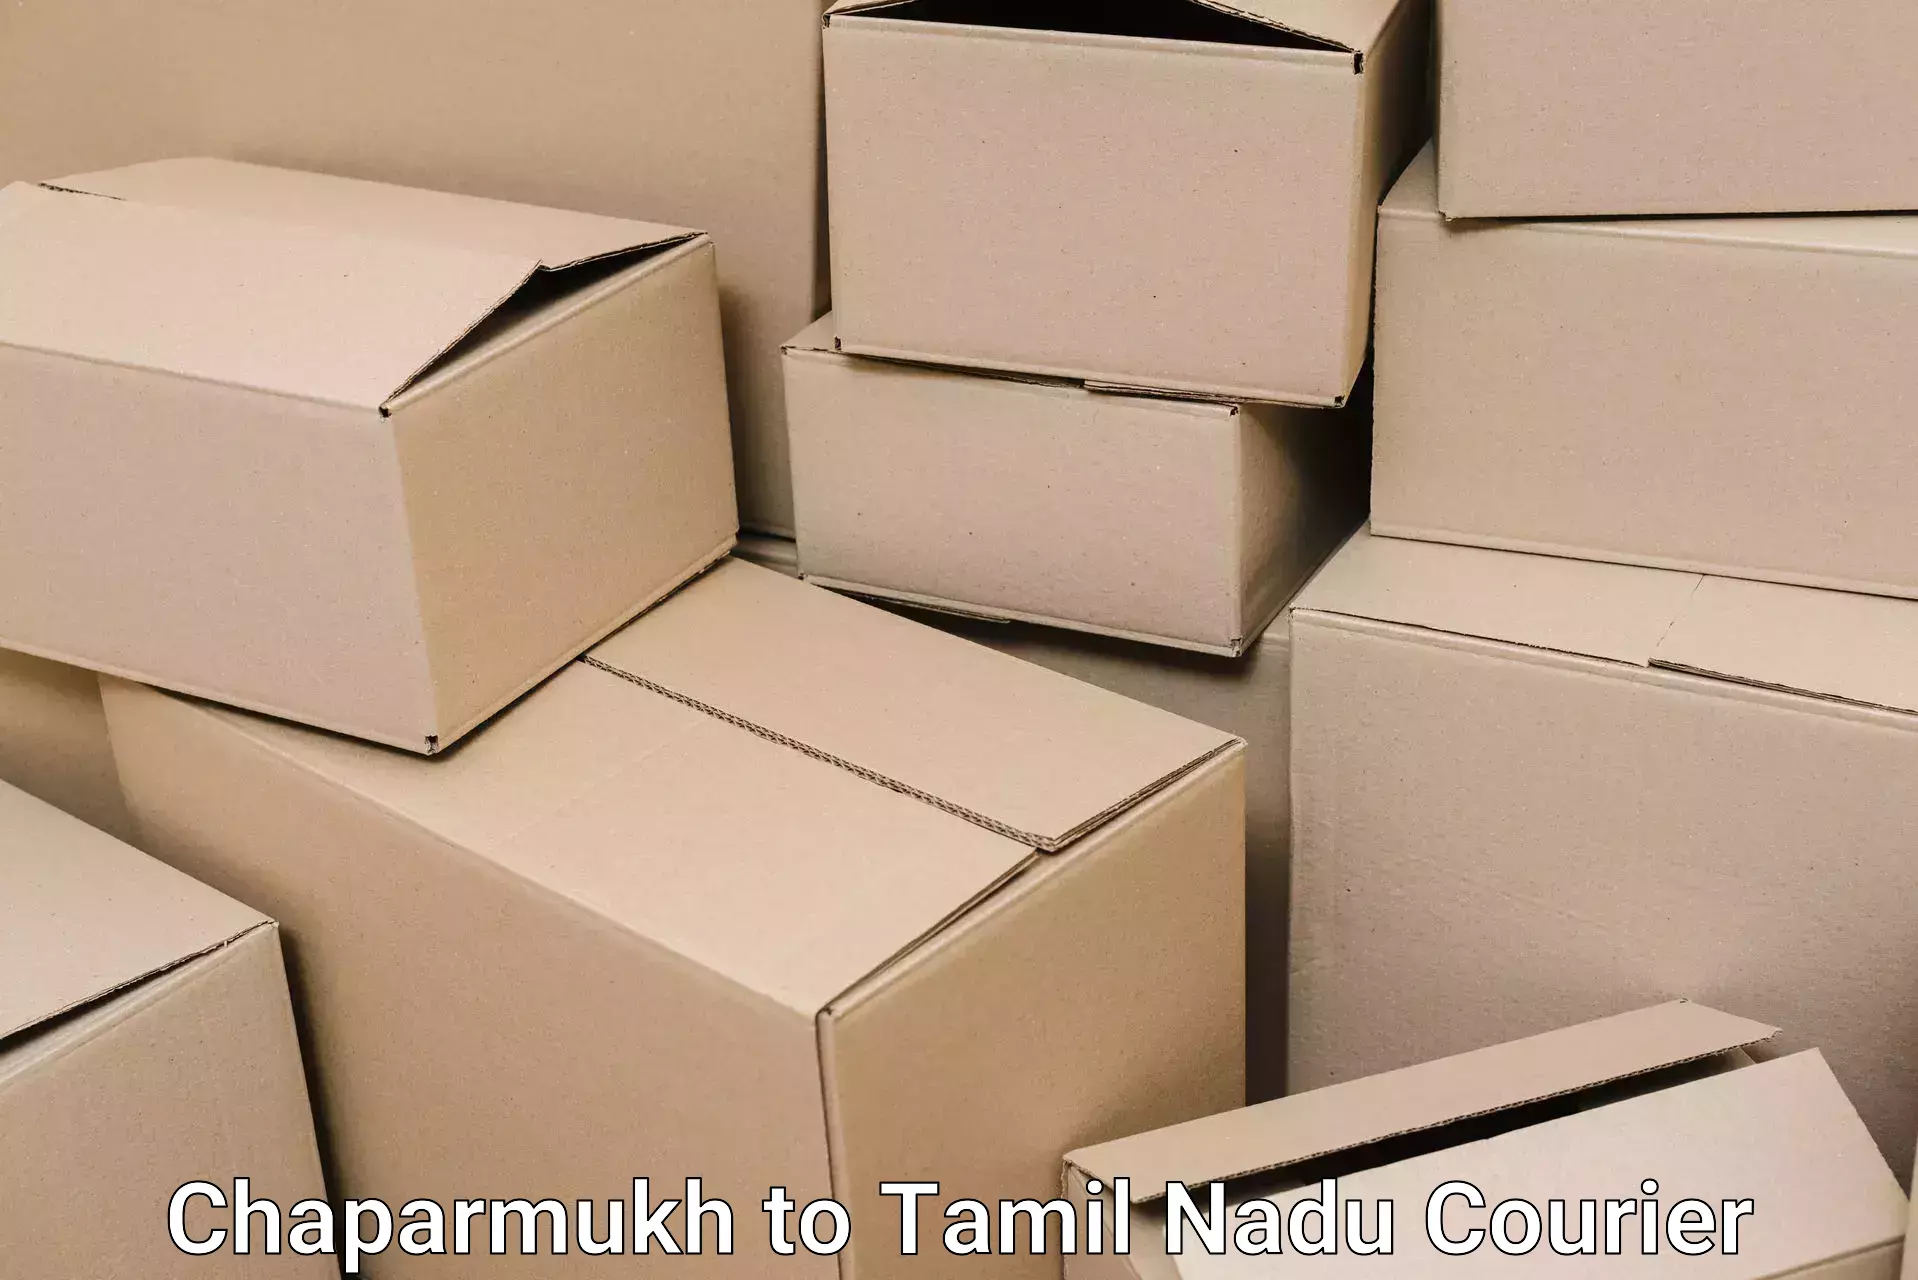 Home relocation experts Chaparmukh to Periyakulam